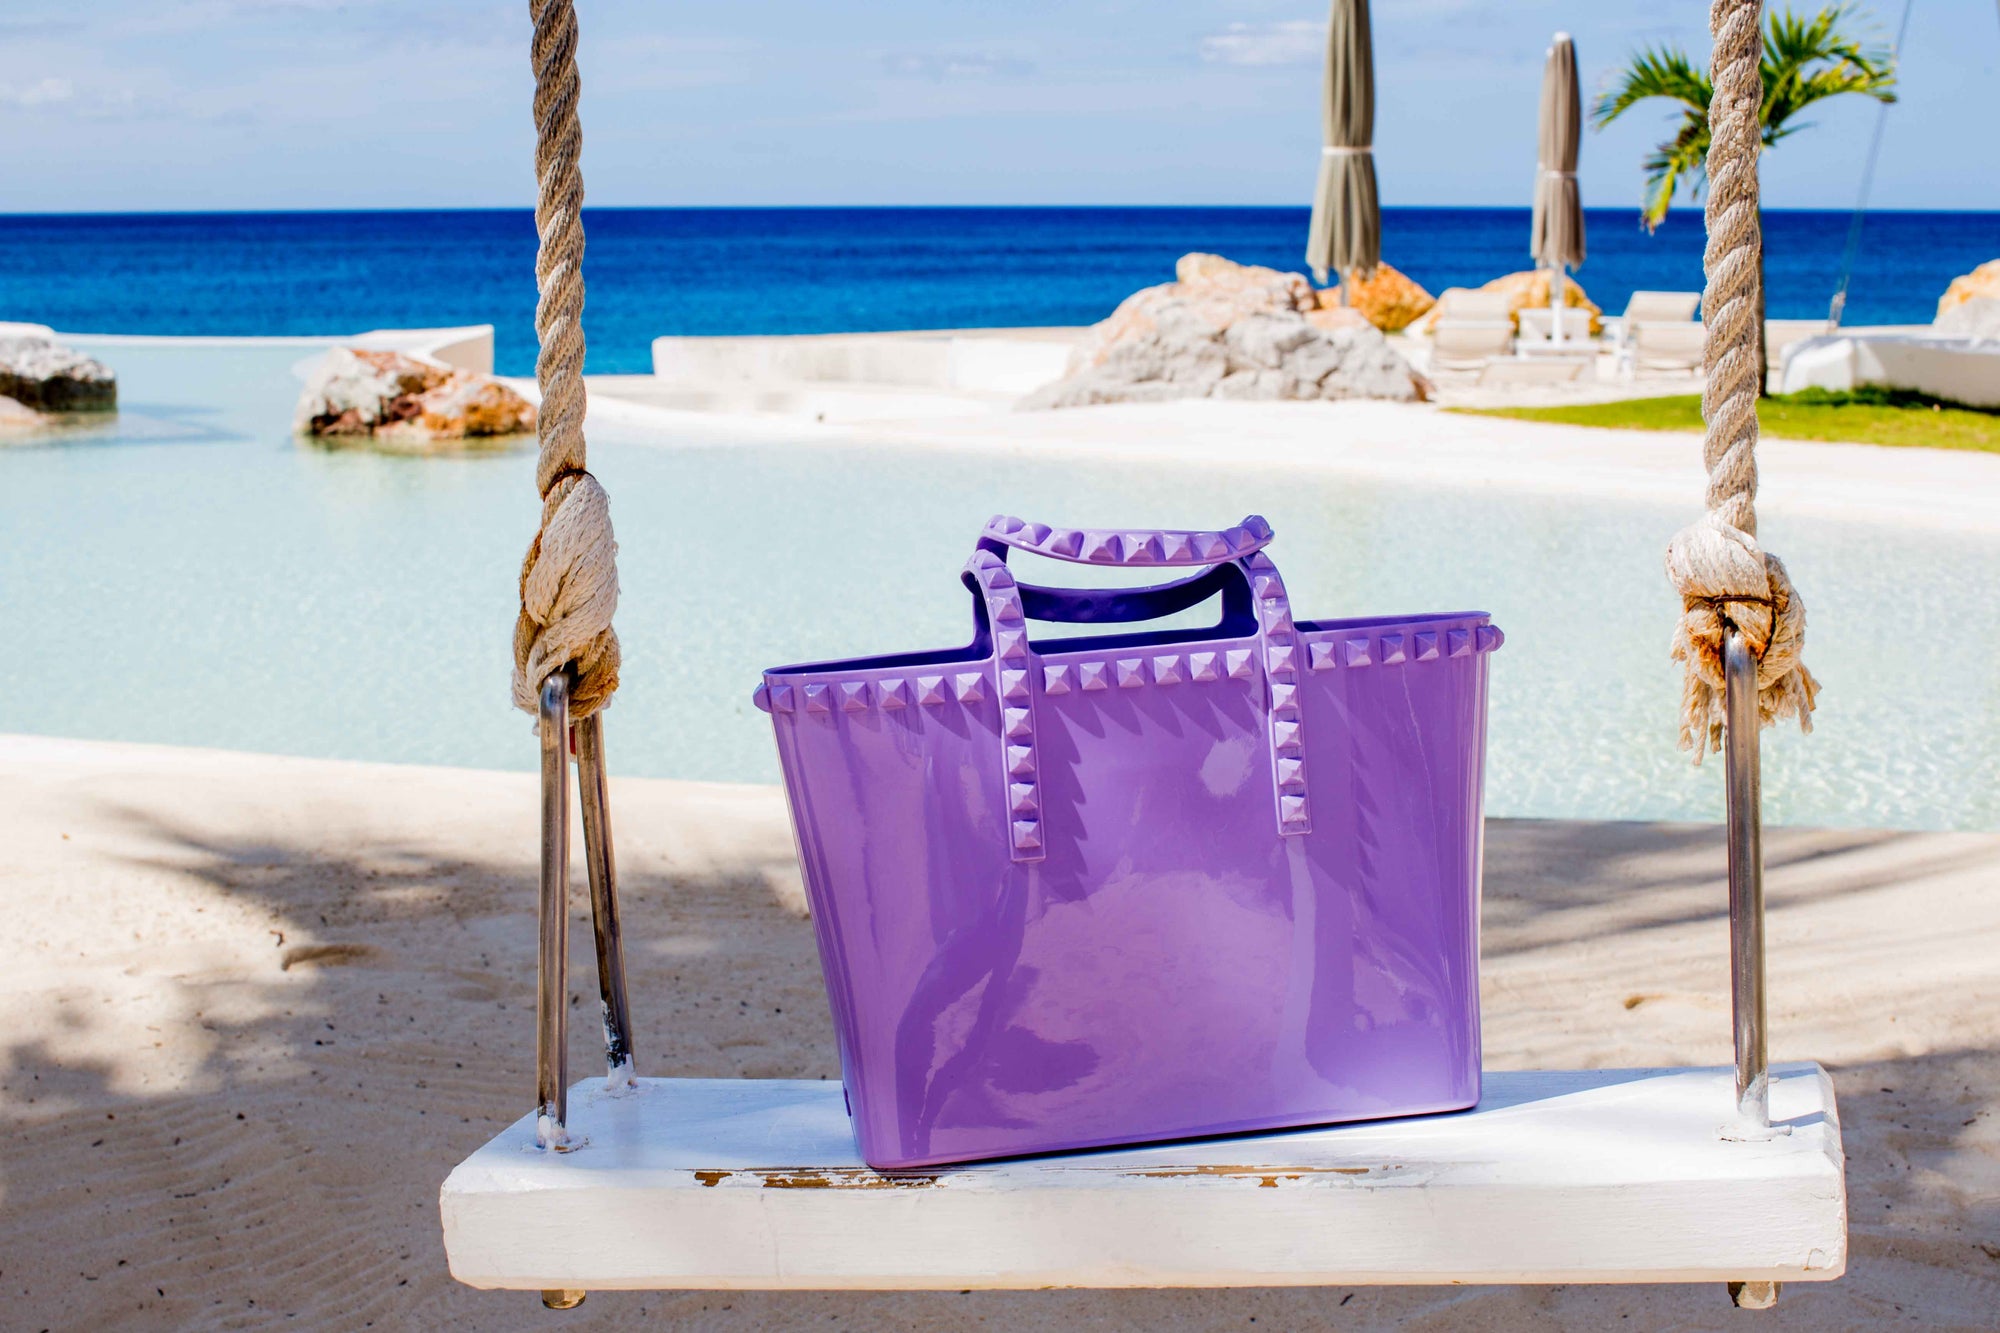 Waterproof Carmen Sol mini beach bags for women and kids in color violet